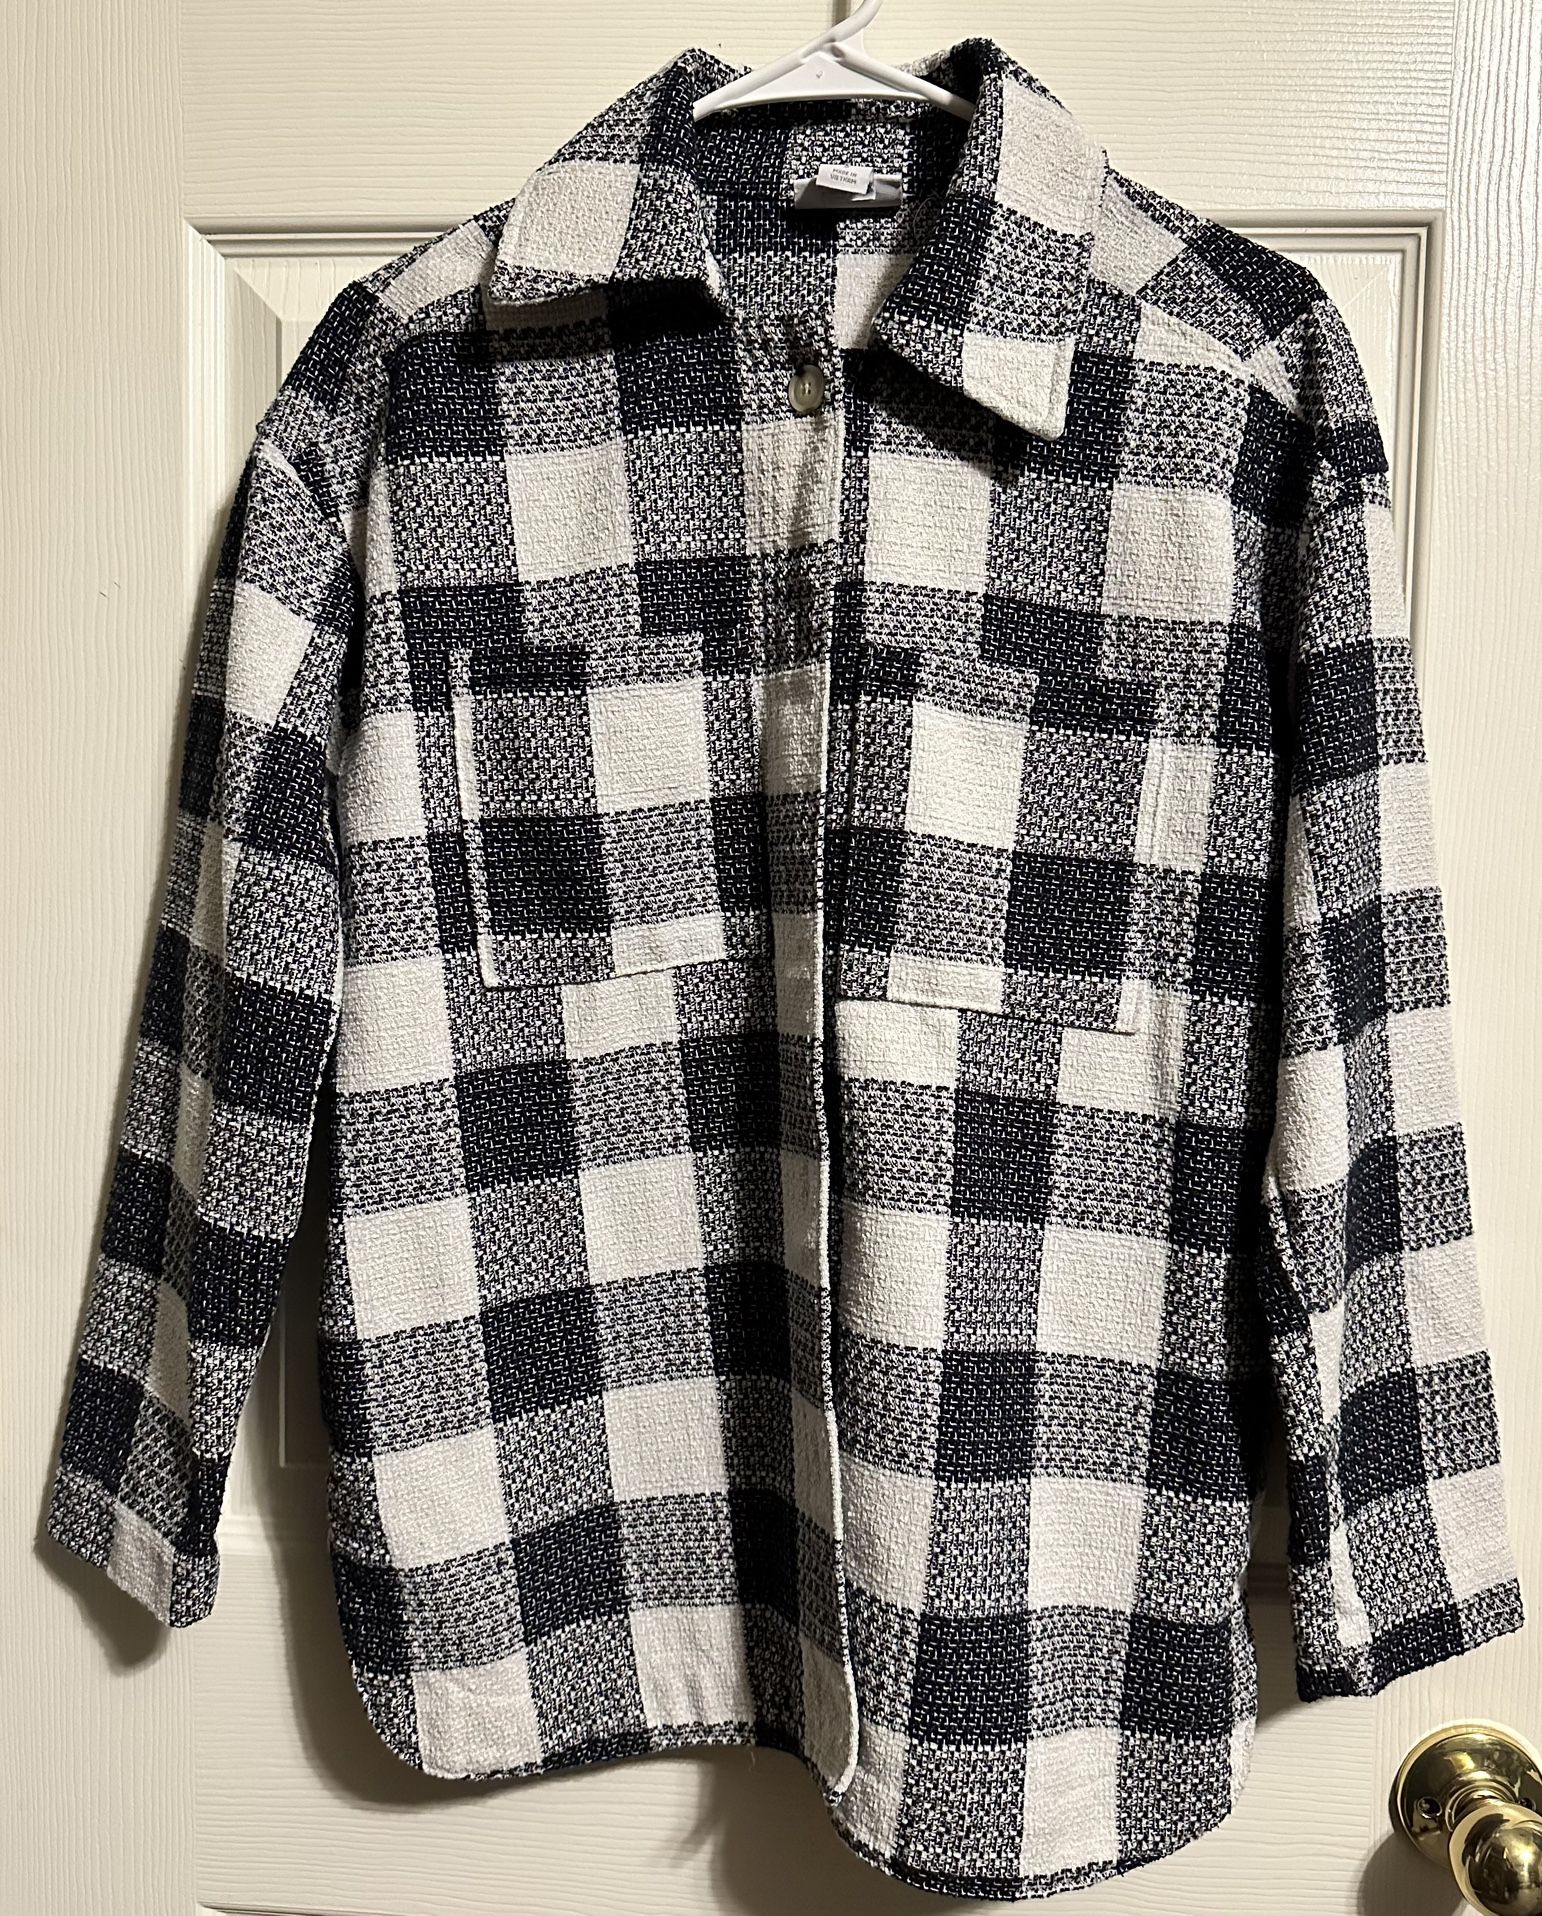 Liz Claiborne Checkered Shirt Size Small